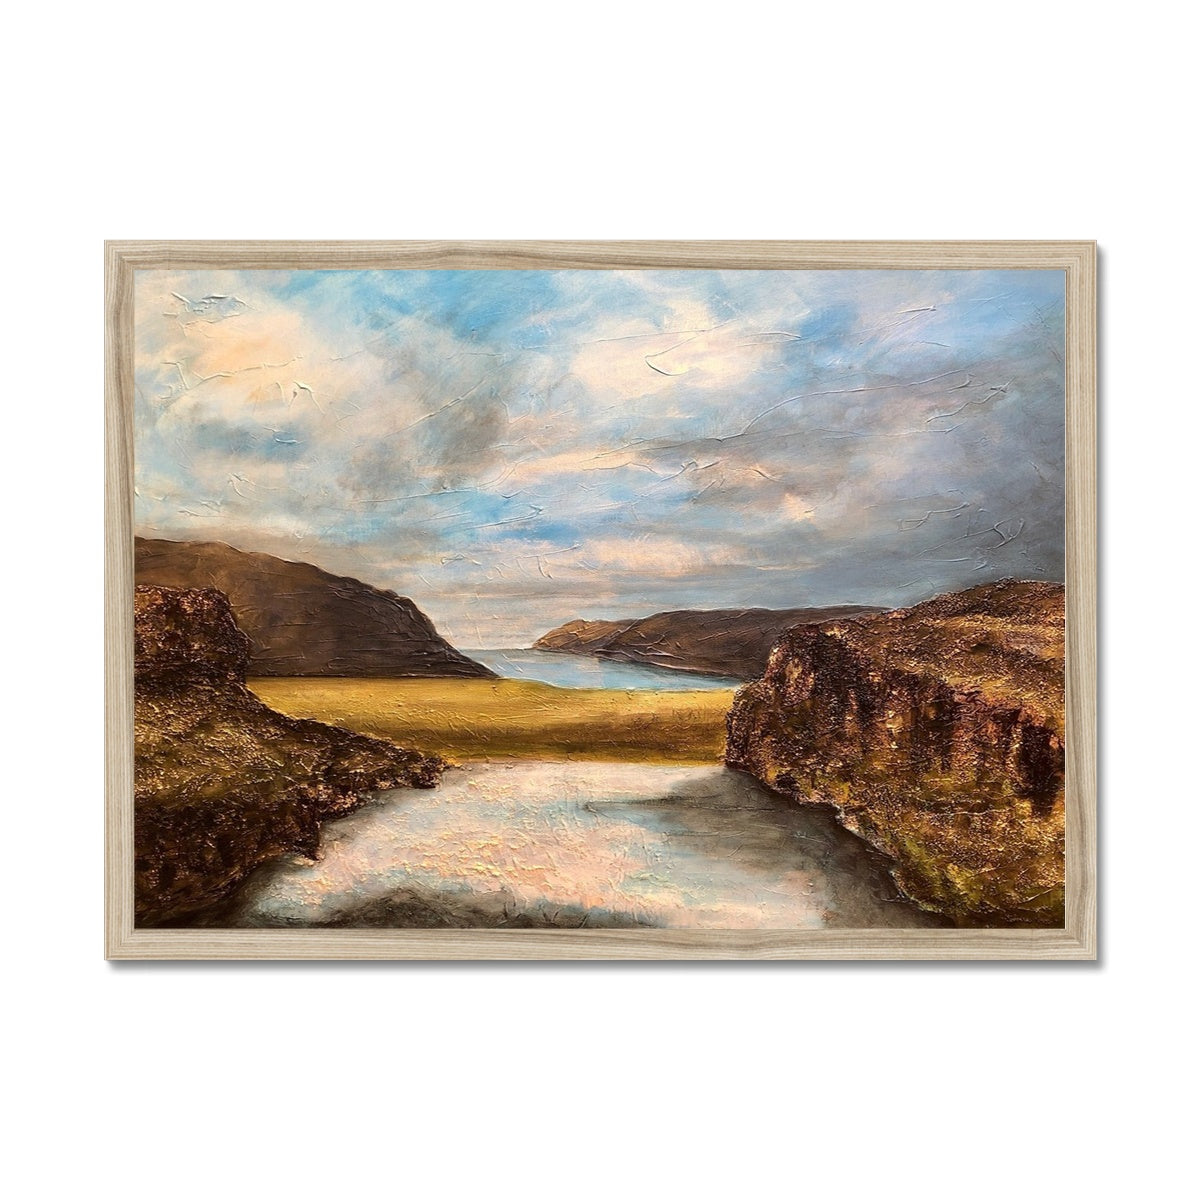 Westfjords Iceland Painting | Framed Prints From Scotland-Framed Prints-World Art Gallery-A2 Landscape-Natural Frame-Paintings, Prints, Homeware, Art Gifts From Scotland By Scottish Artist Kevin Hunter